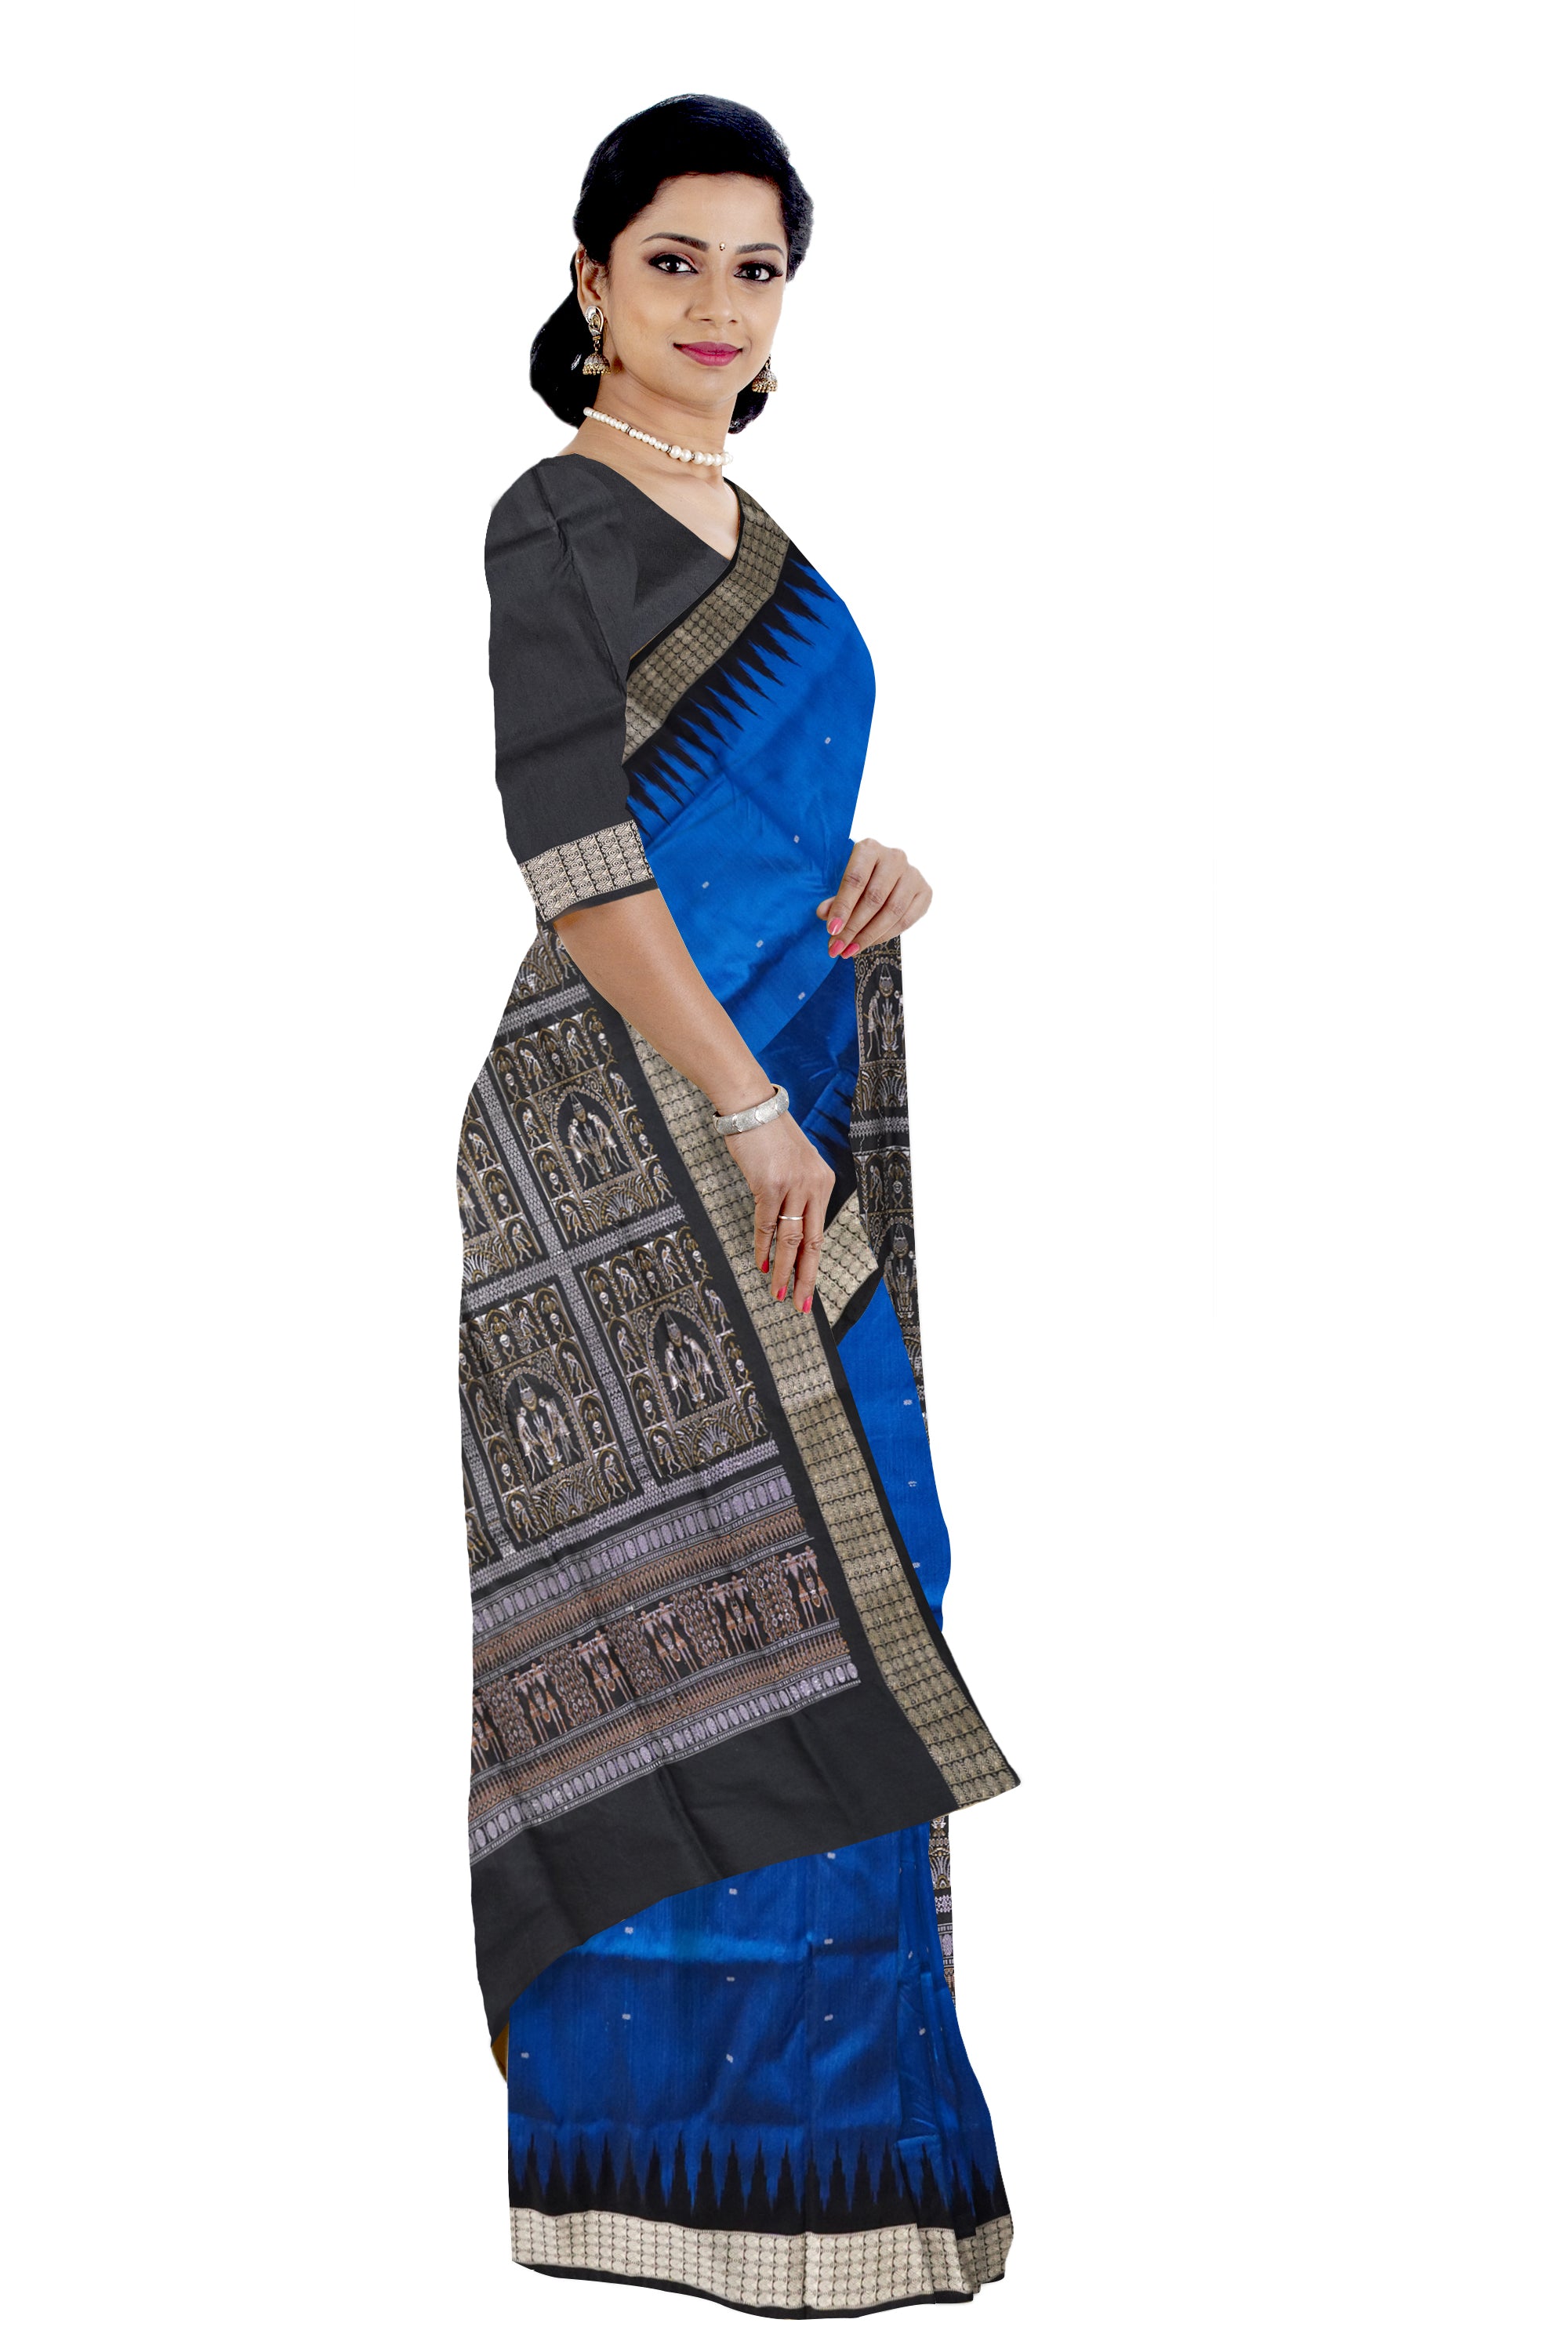 Blue and black pata saree, terracotta bomkei pallu, elegant and versatile. - Koshali Arts & Crafts Enterprise